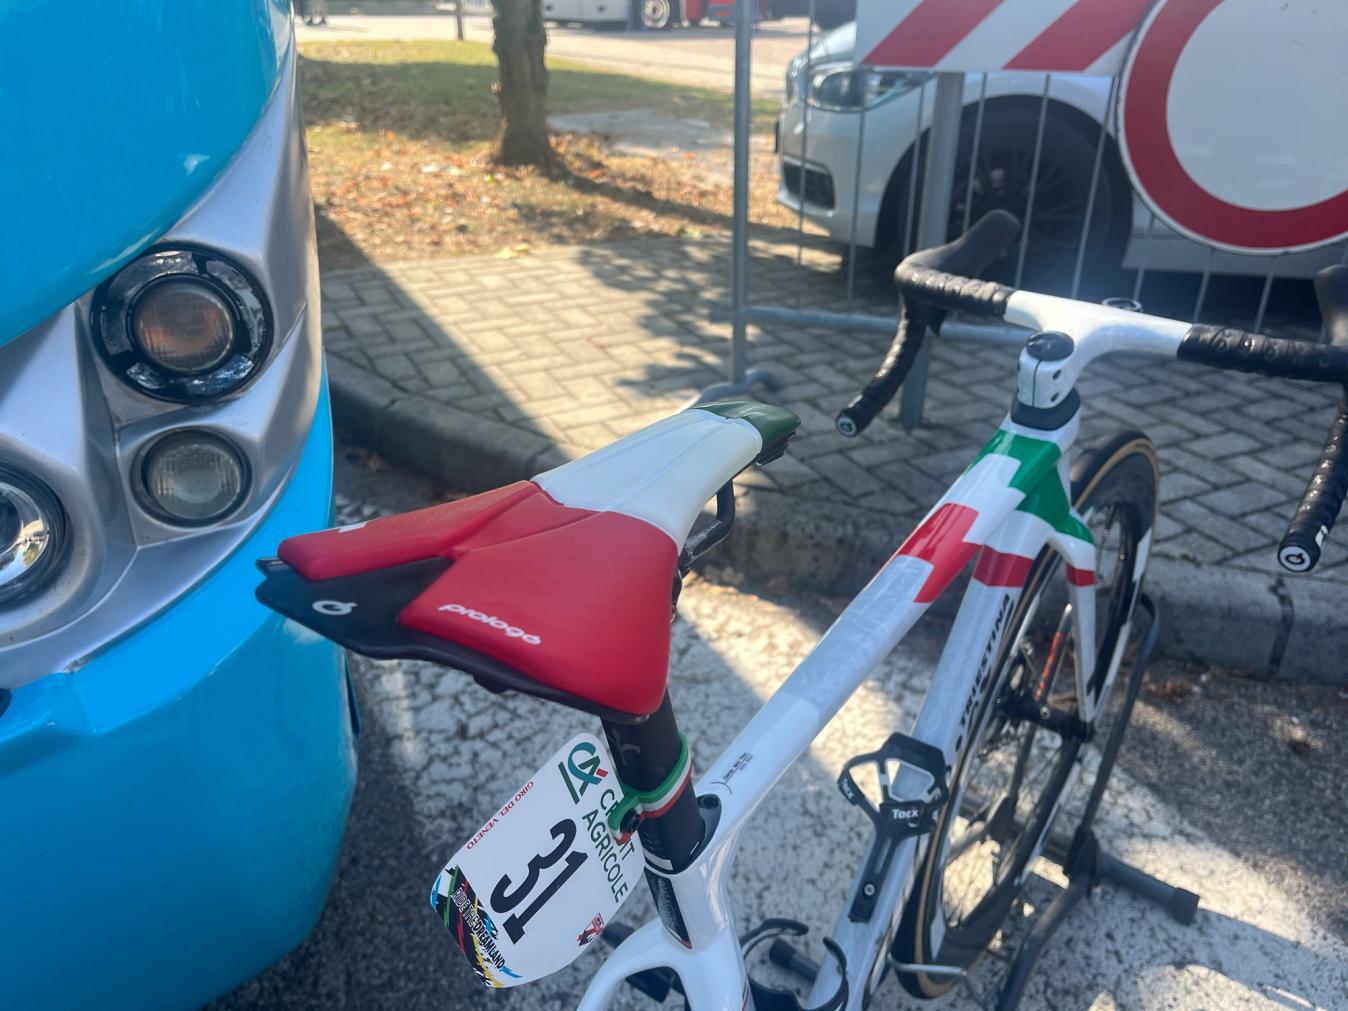 Simone Velasco's race bike has an Italian-themed Prologo Scratch M5 saddle